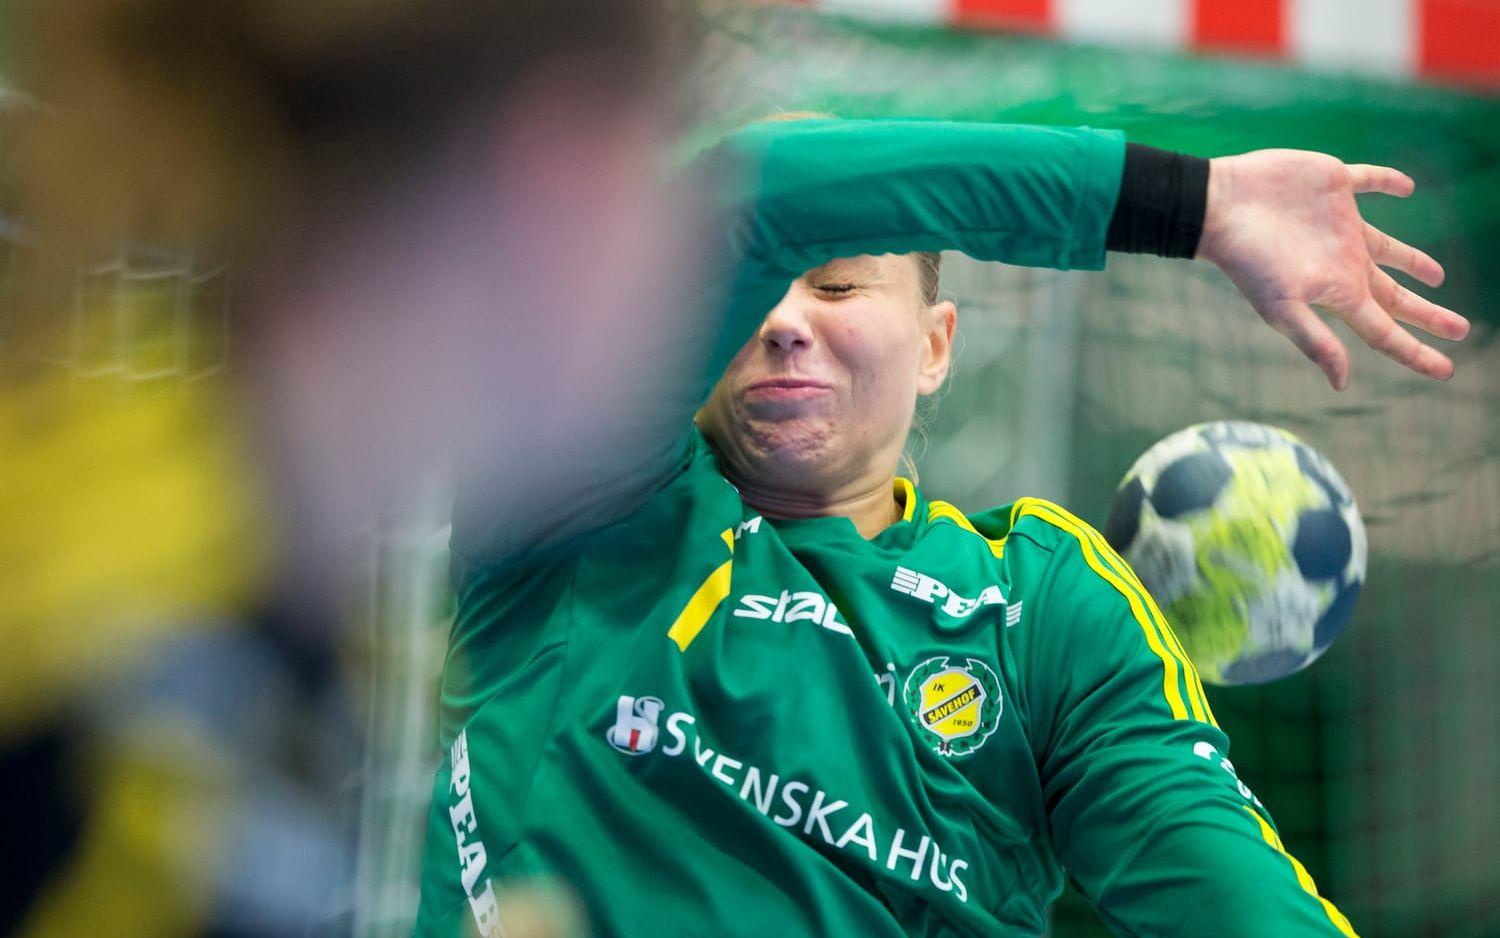 Den danska burväktaren ersattes av Andersson en bit in i matchen. Bild: Michael Erichsen, Bildbyrån.